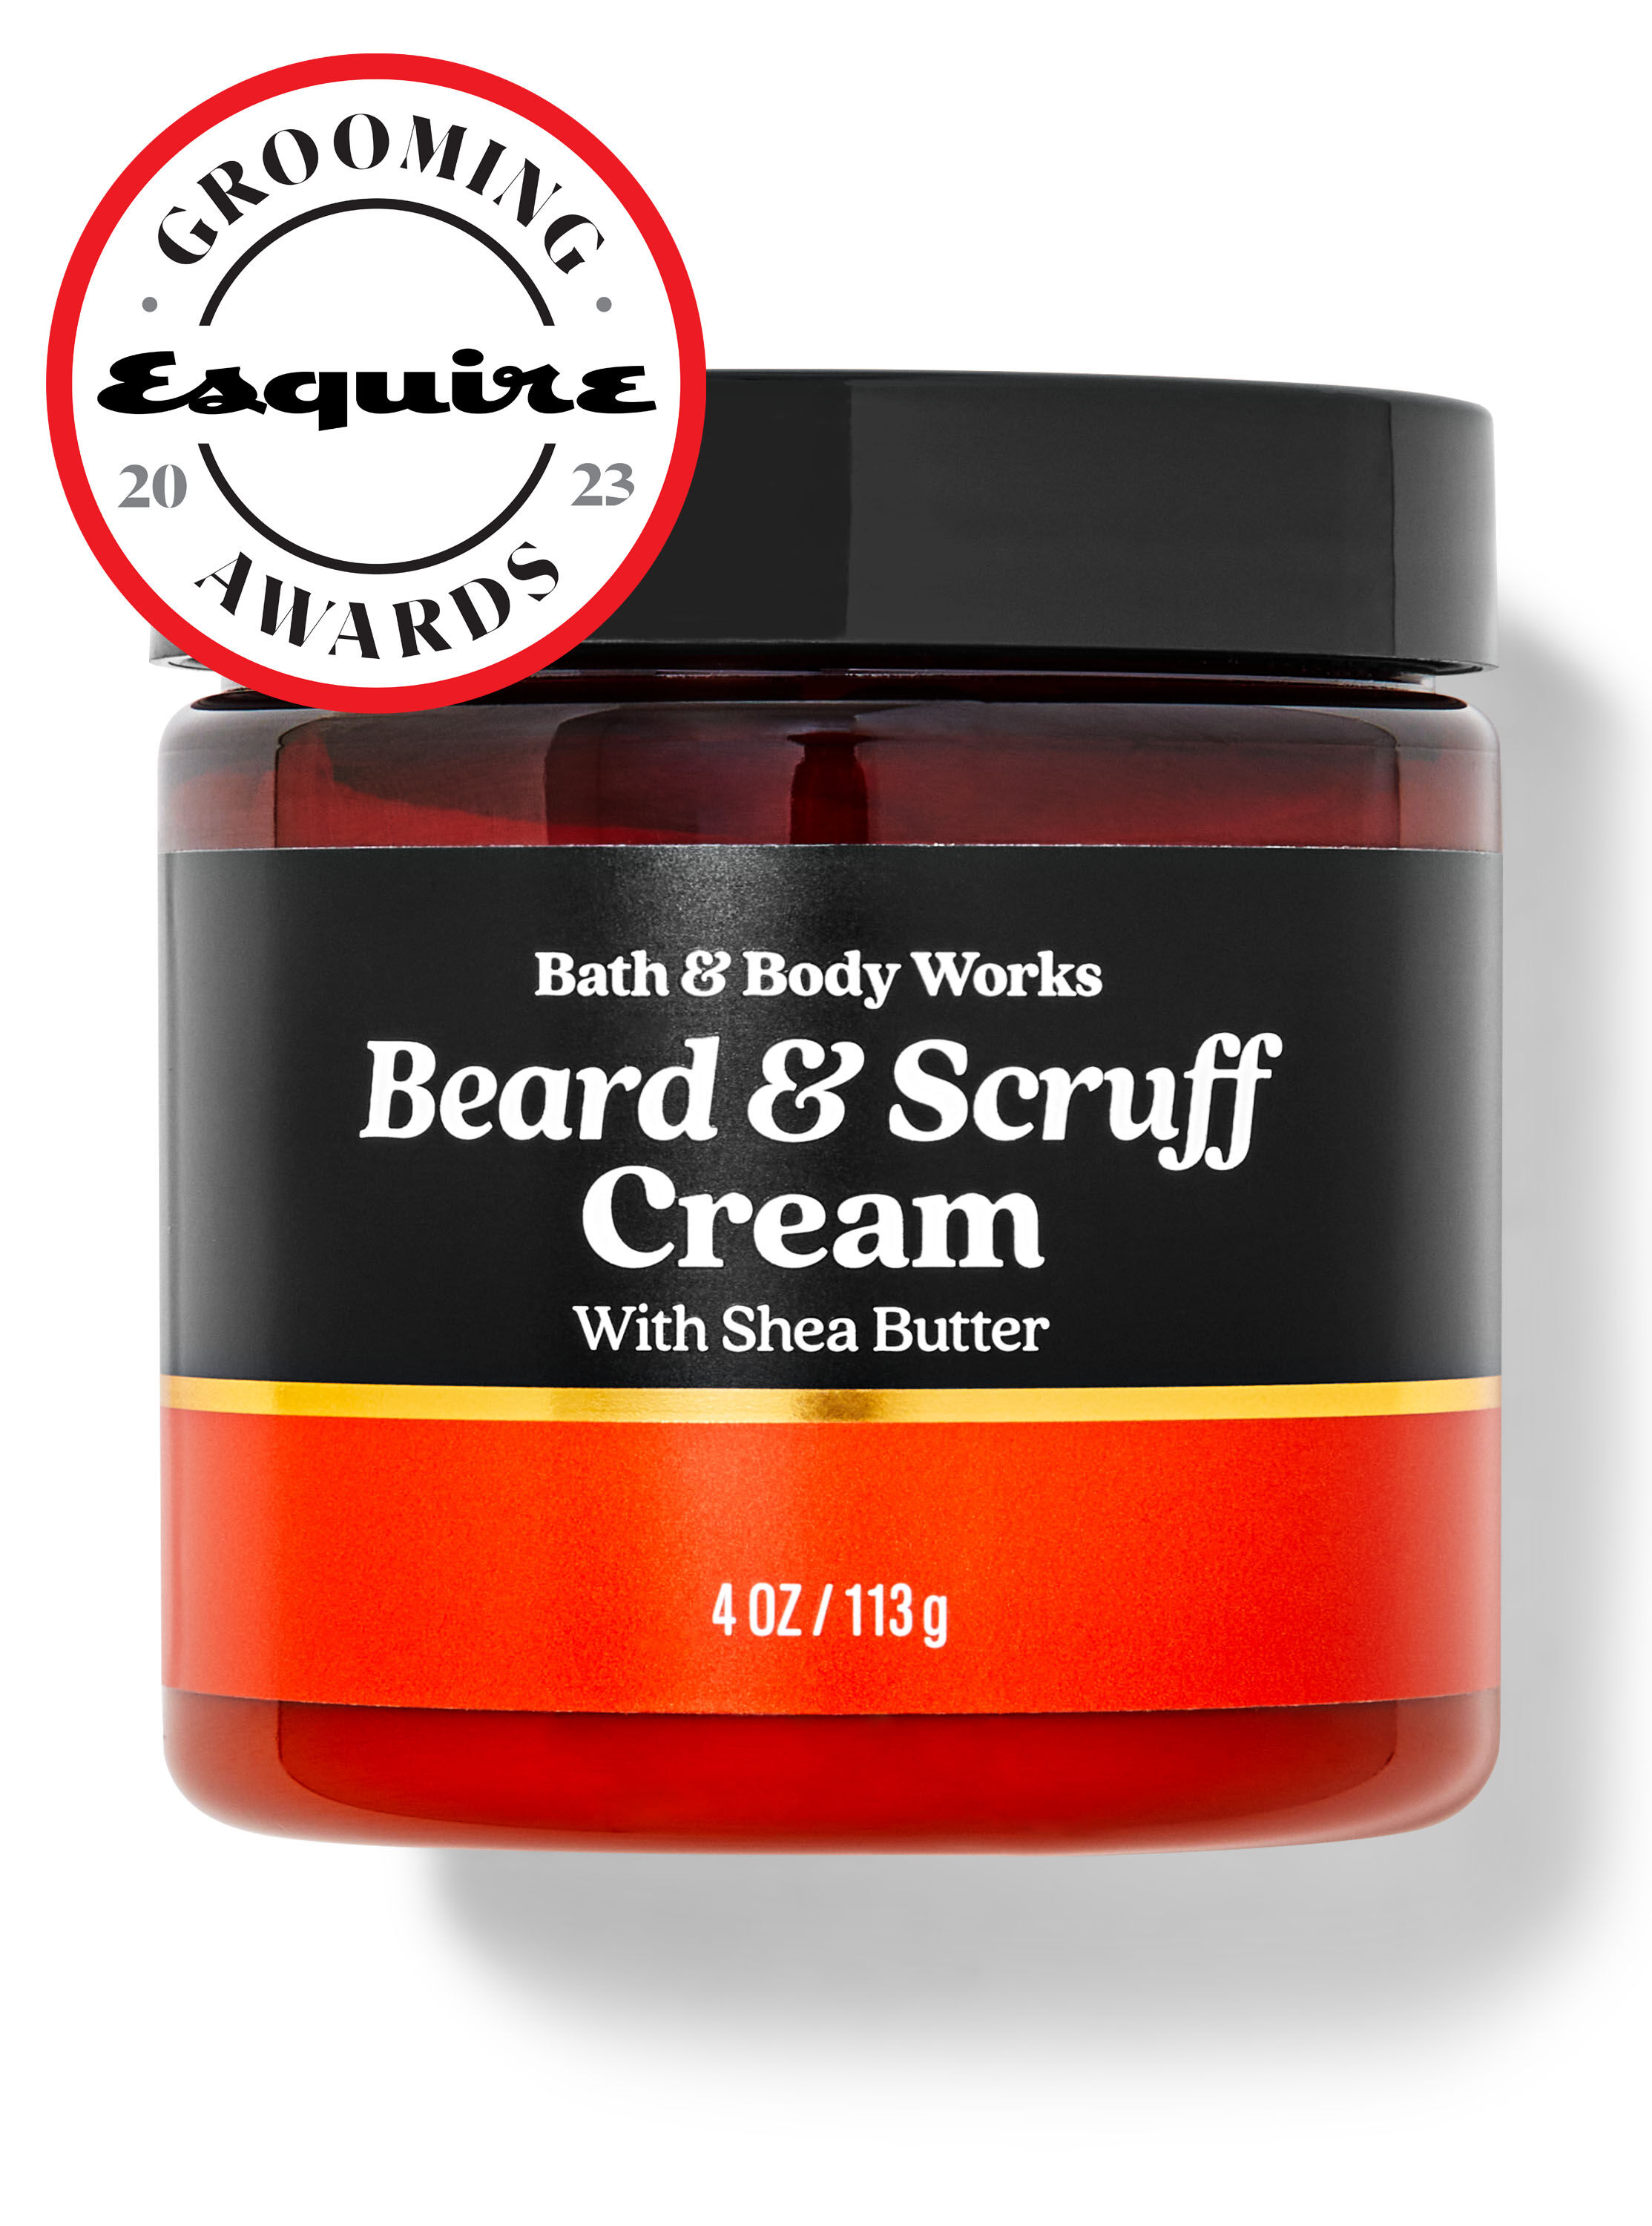 Beard & Scruff Cream Shea Butter